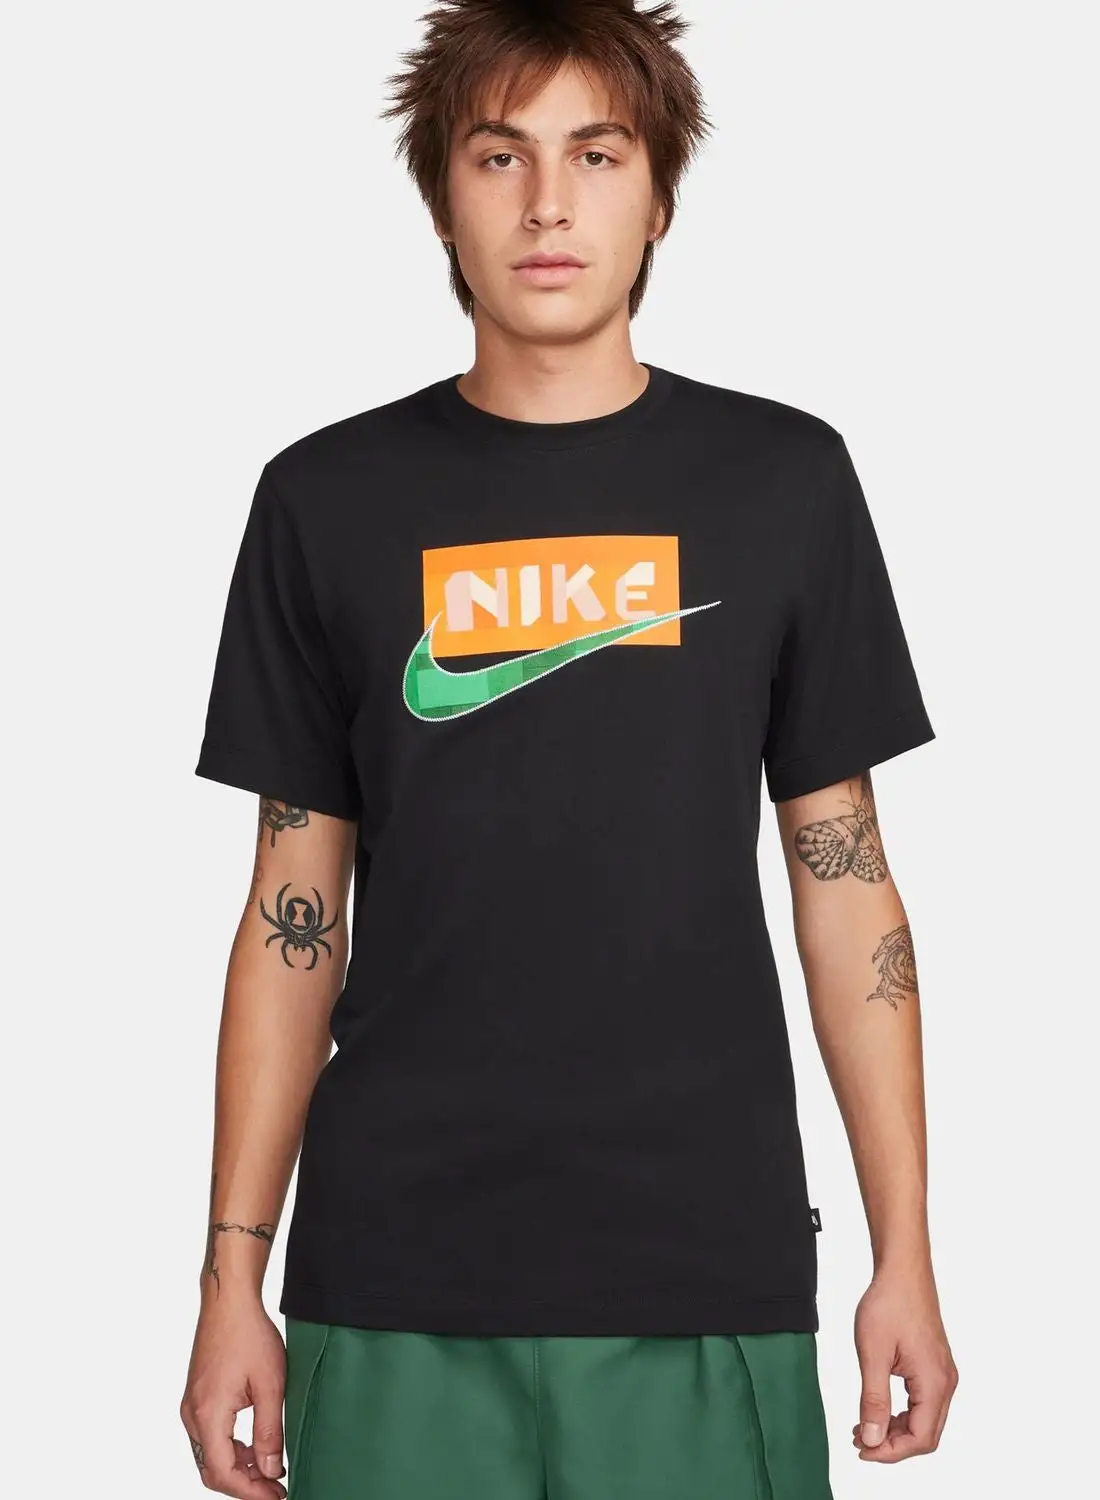 Nike Oc Pack 3 M90 T-Shirt